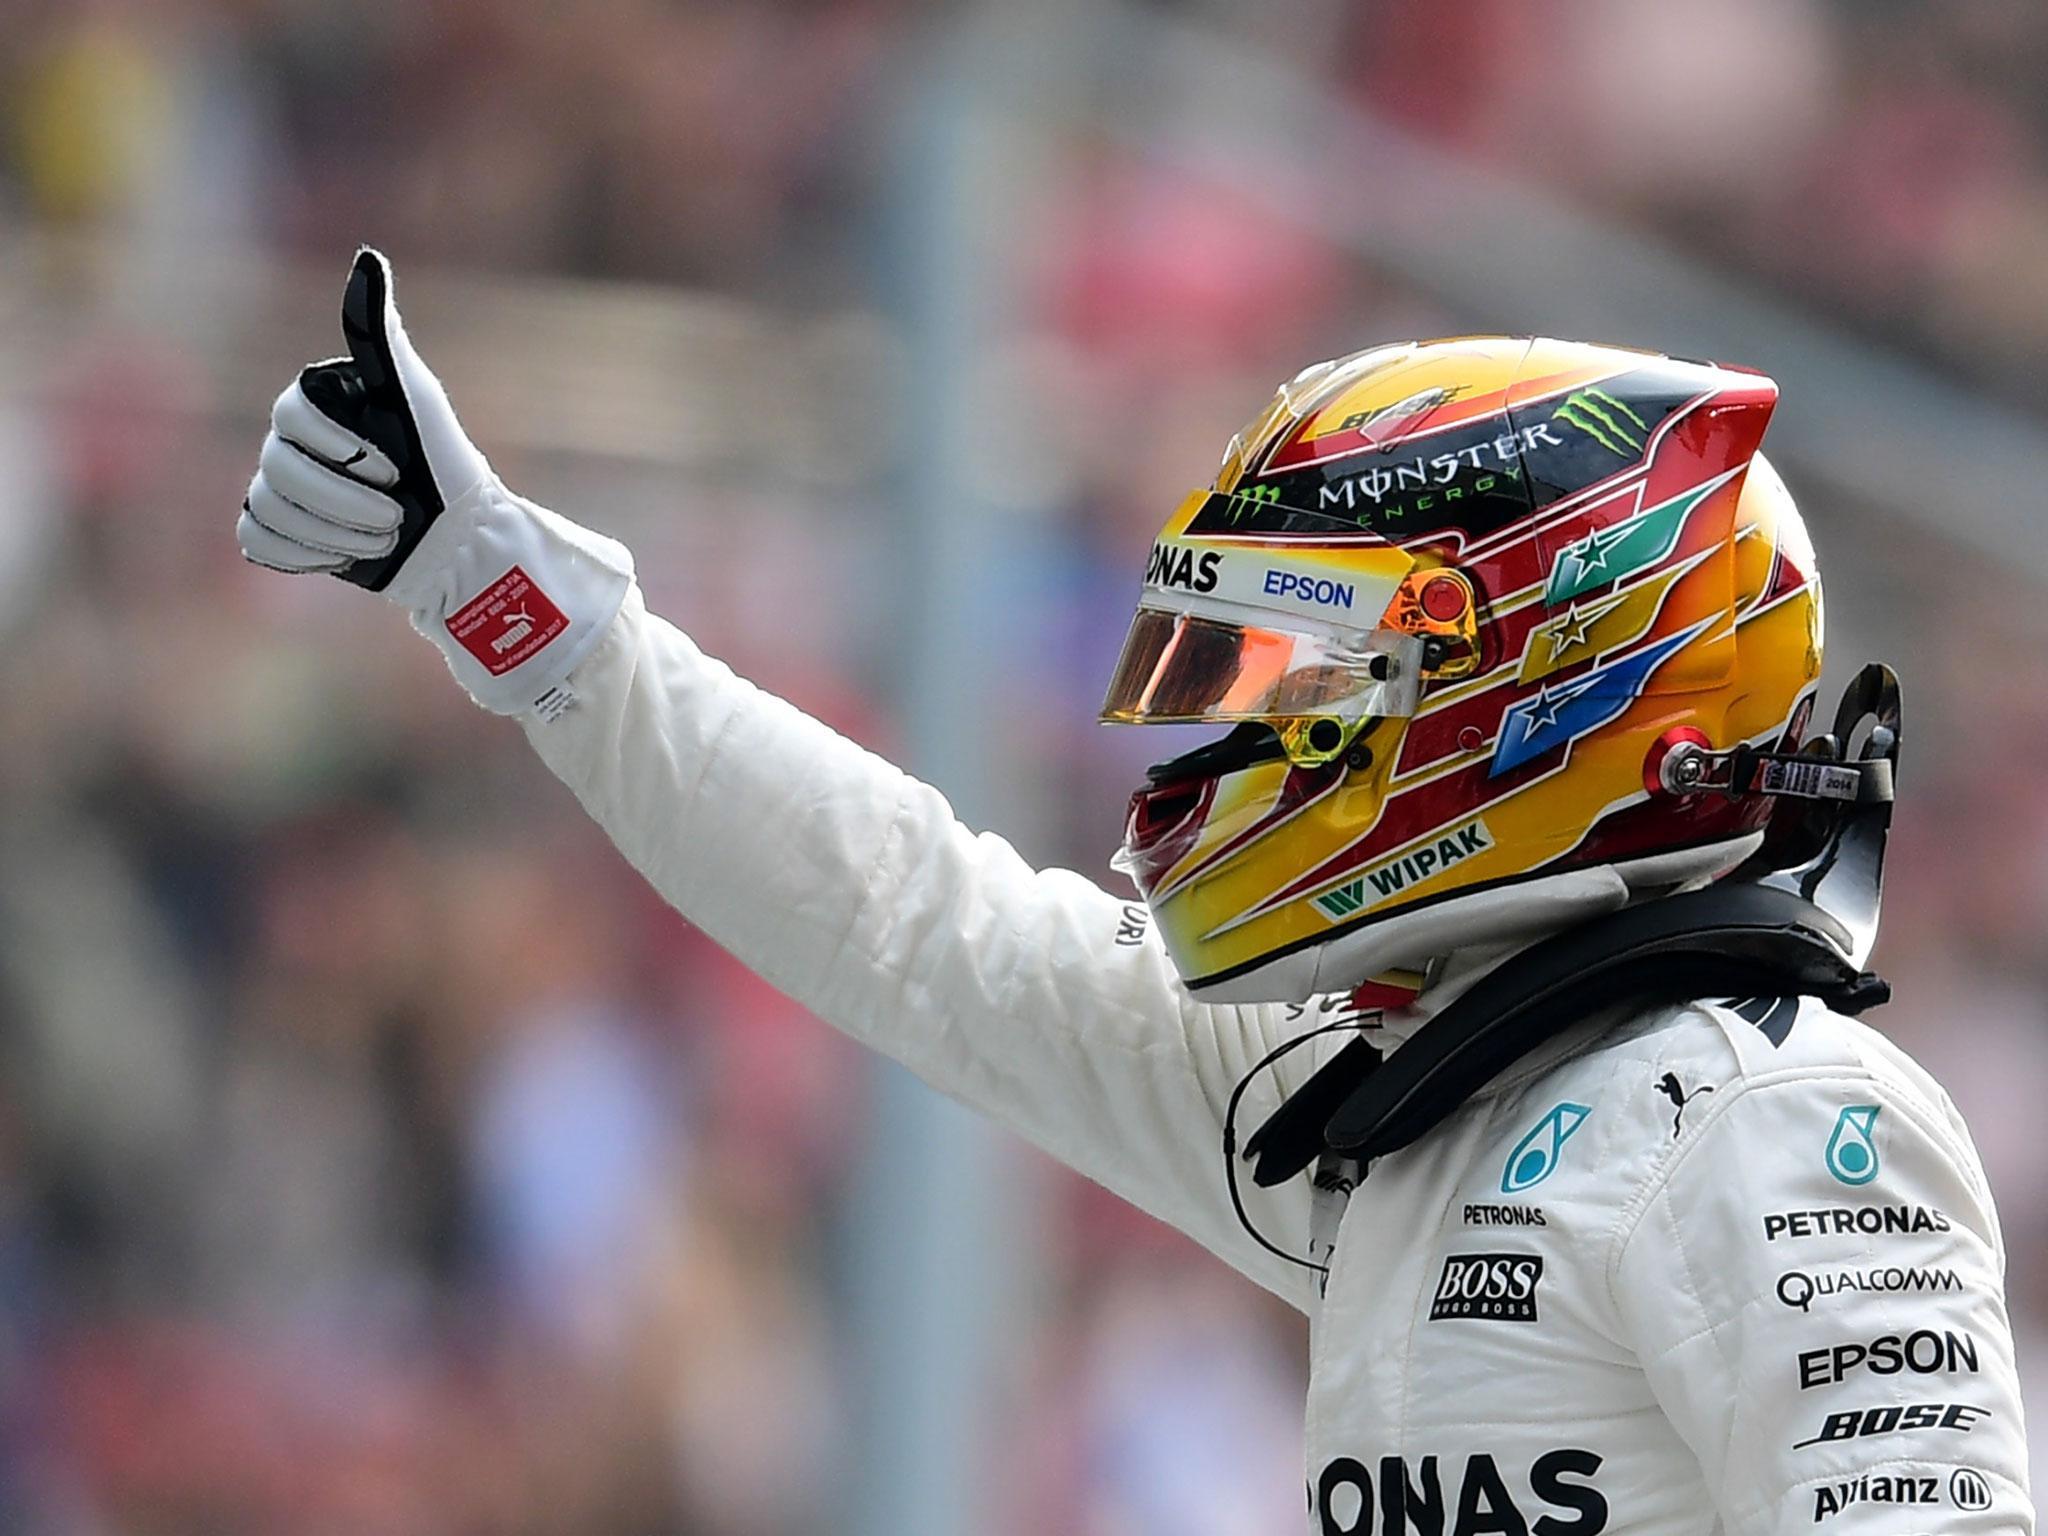 Lewis Hamilton will start Sunday's race from pole position